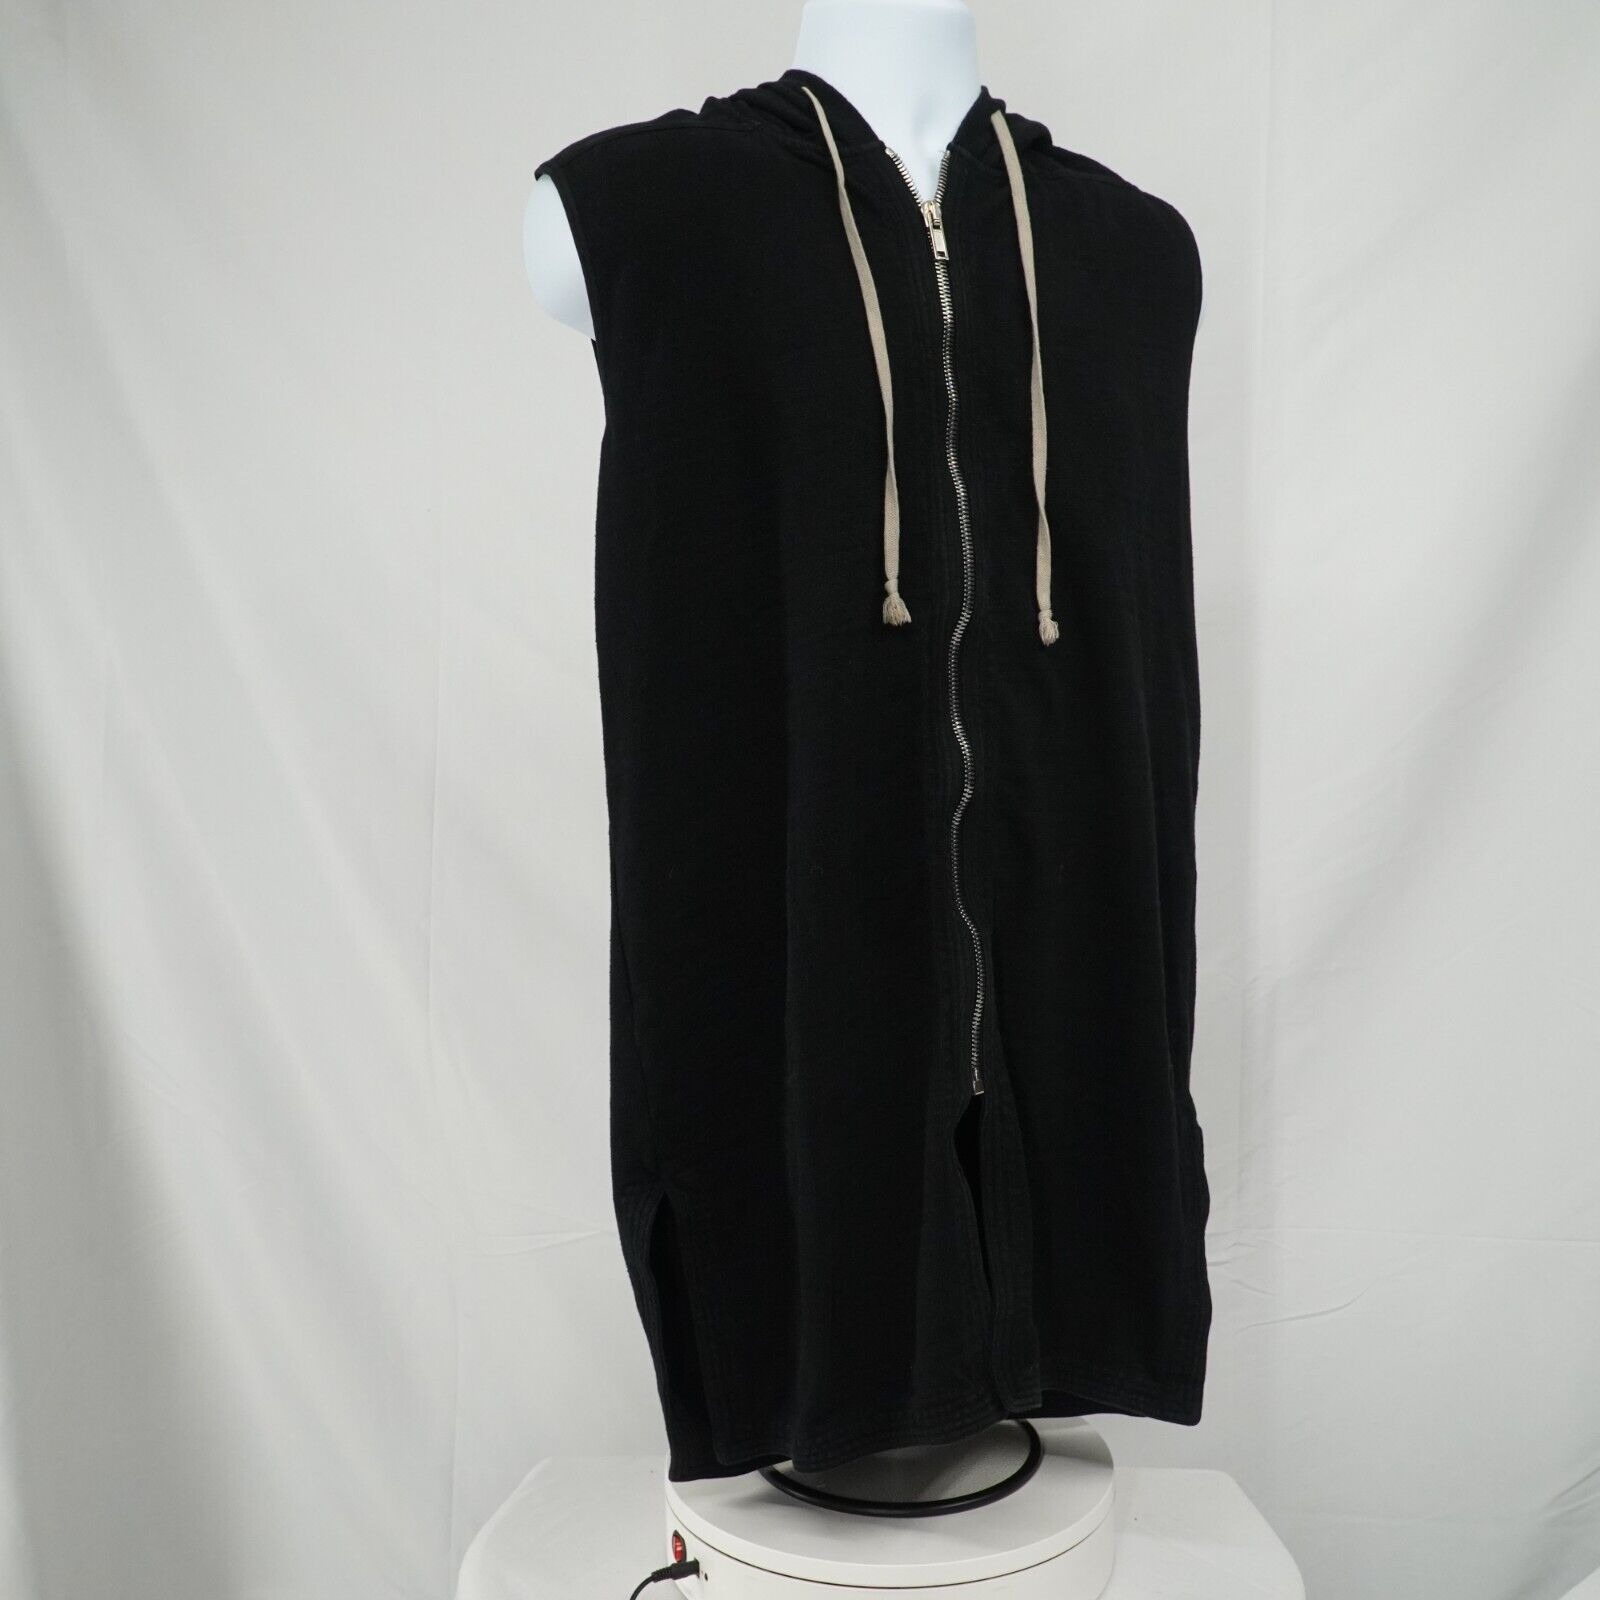 Black Zip Up Sleeveless Jacket Hoodie Cotton - Medium - 21